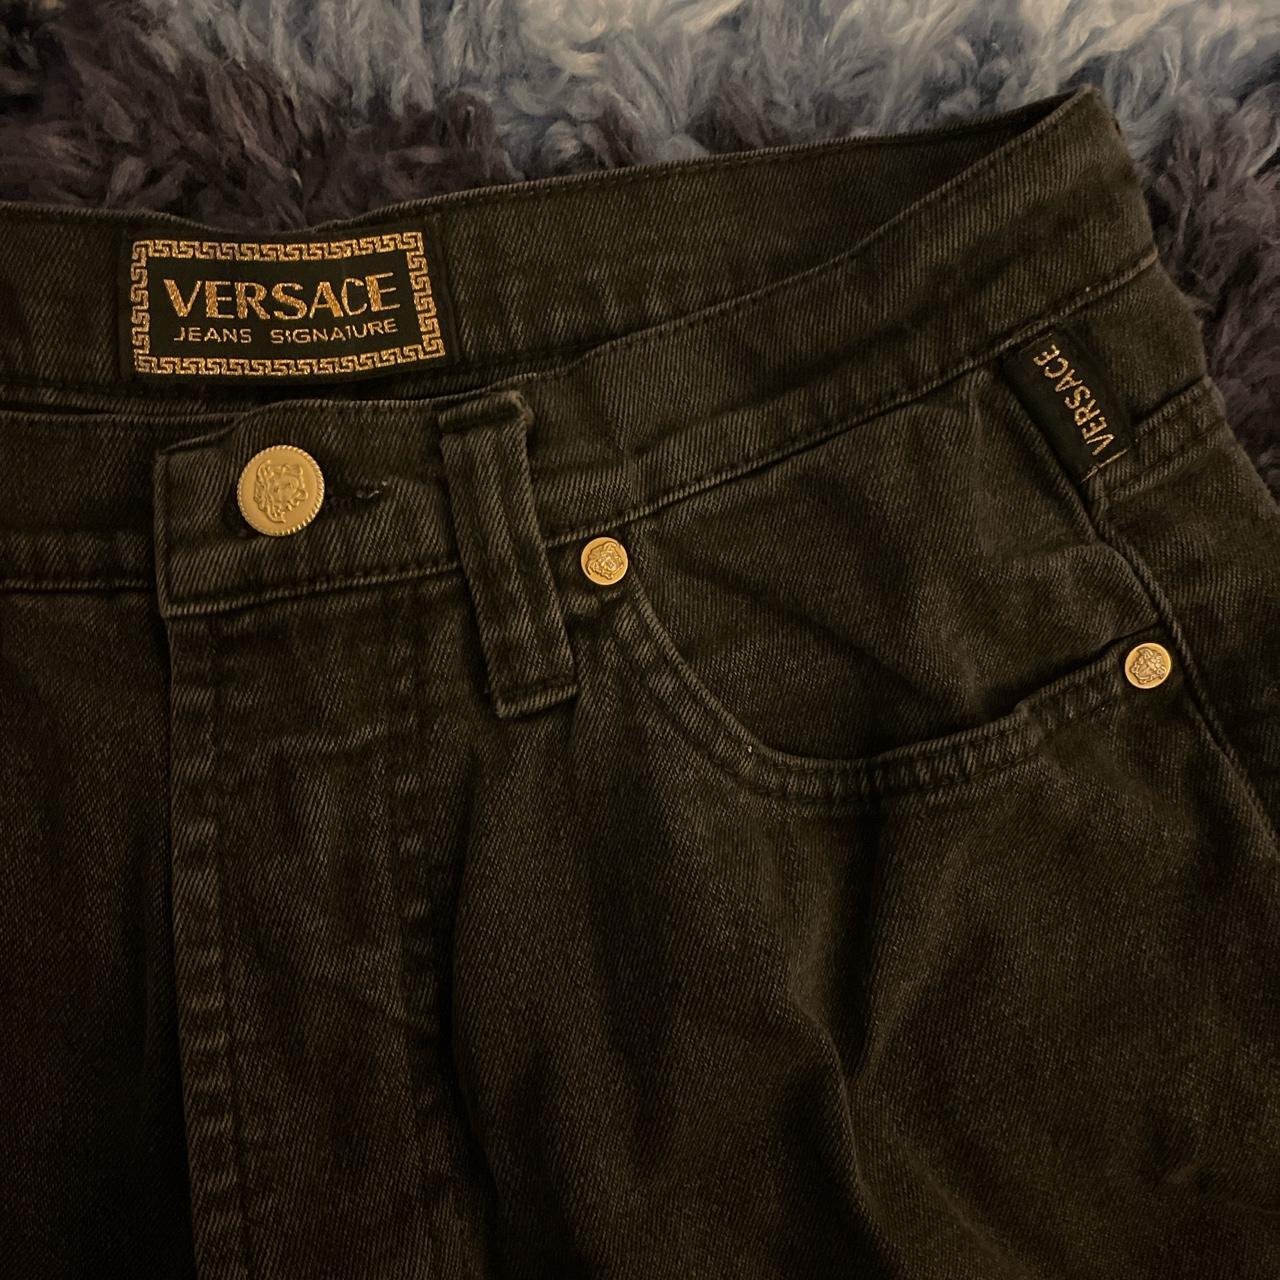 Vintage 90s Versace pants with Medusa rivets and... - Depop